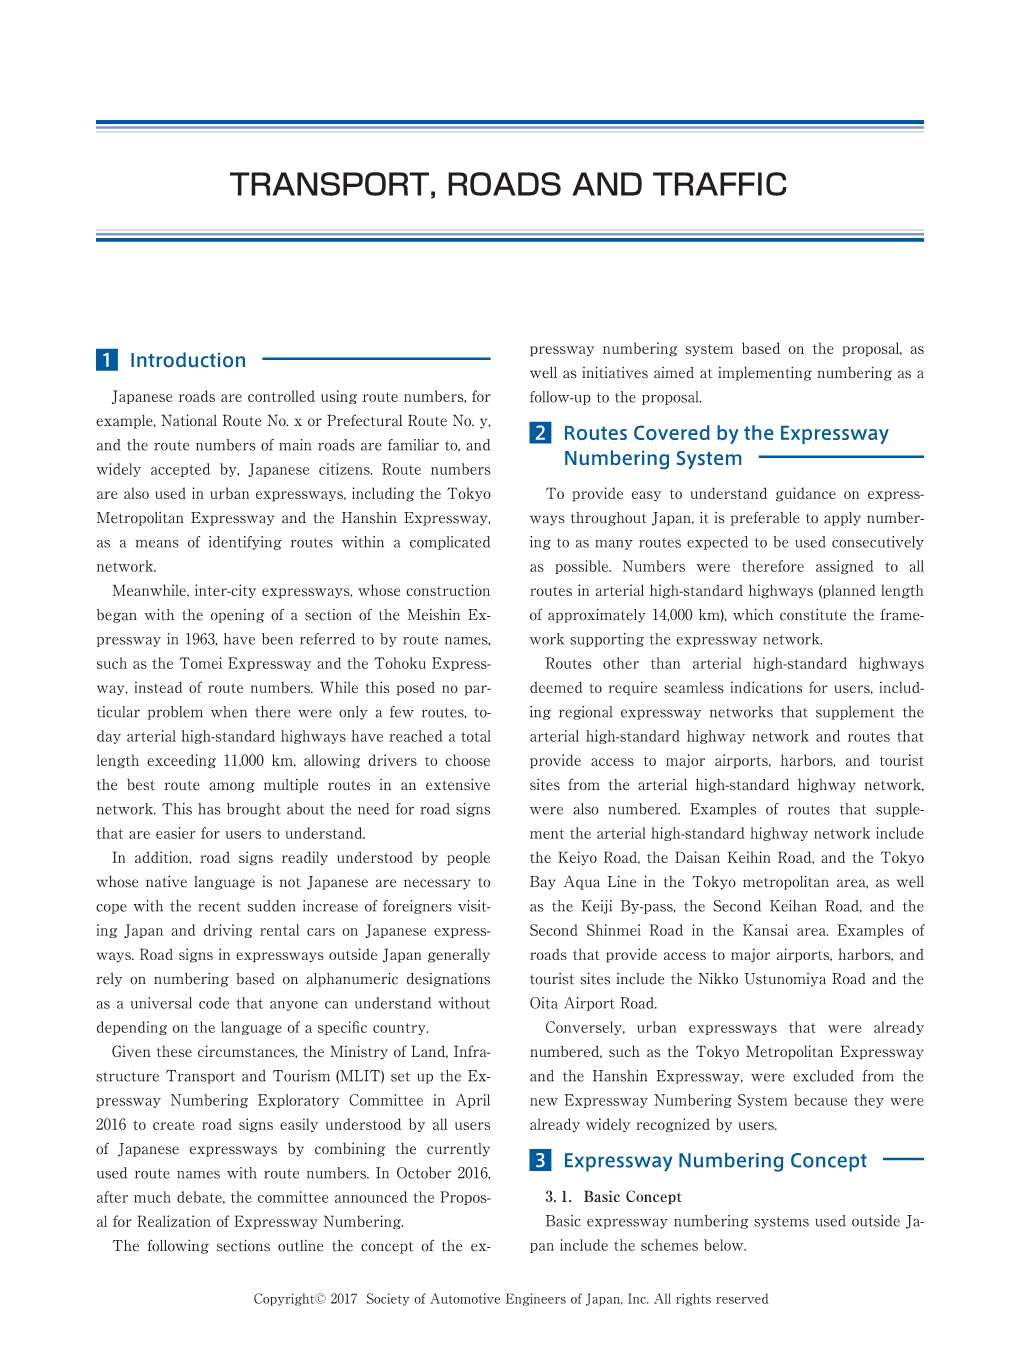 Transport, Roads and Traffic